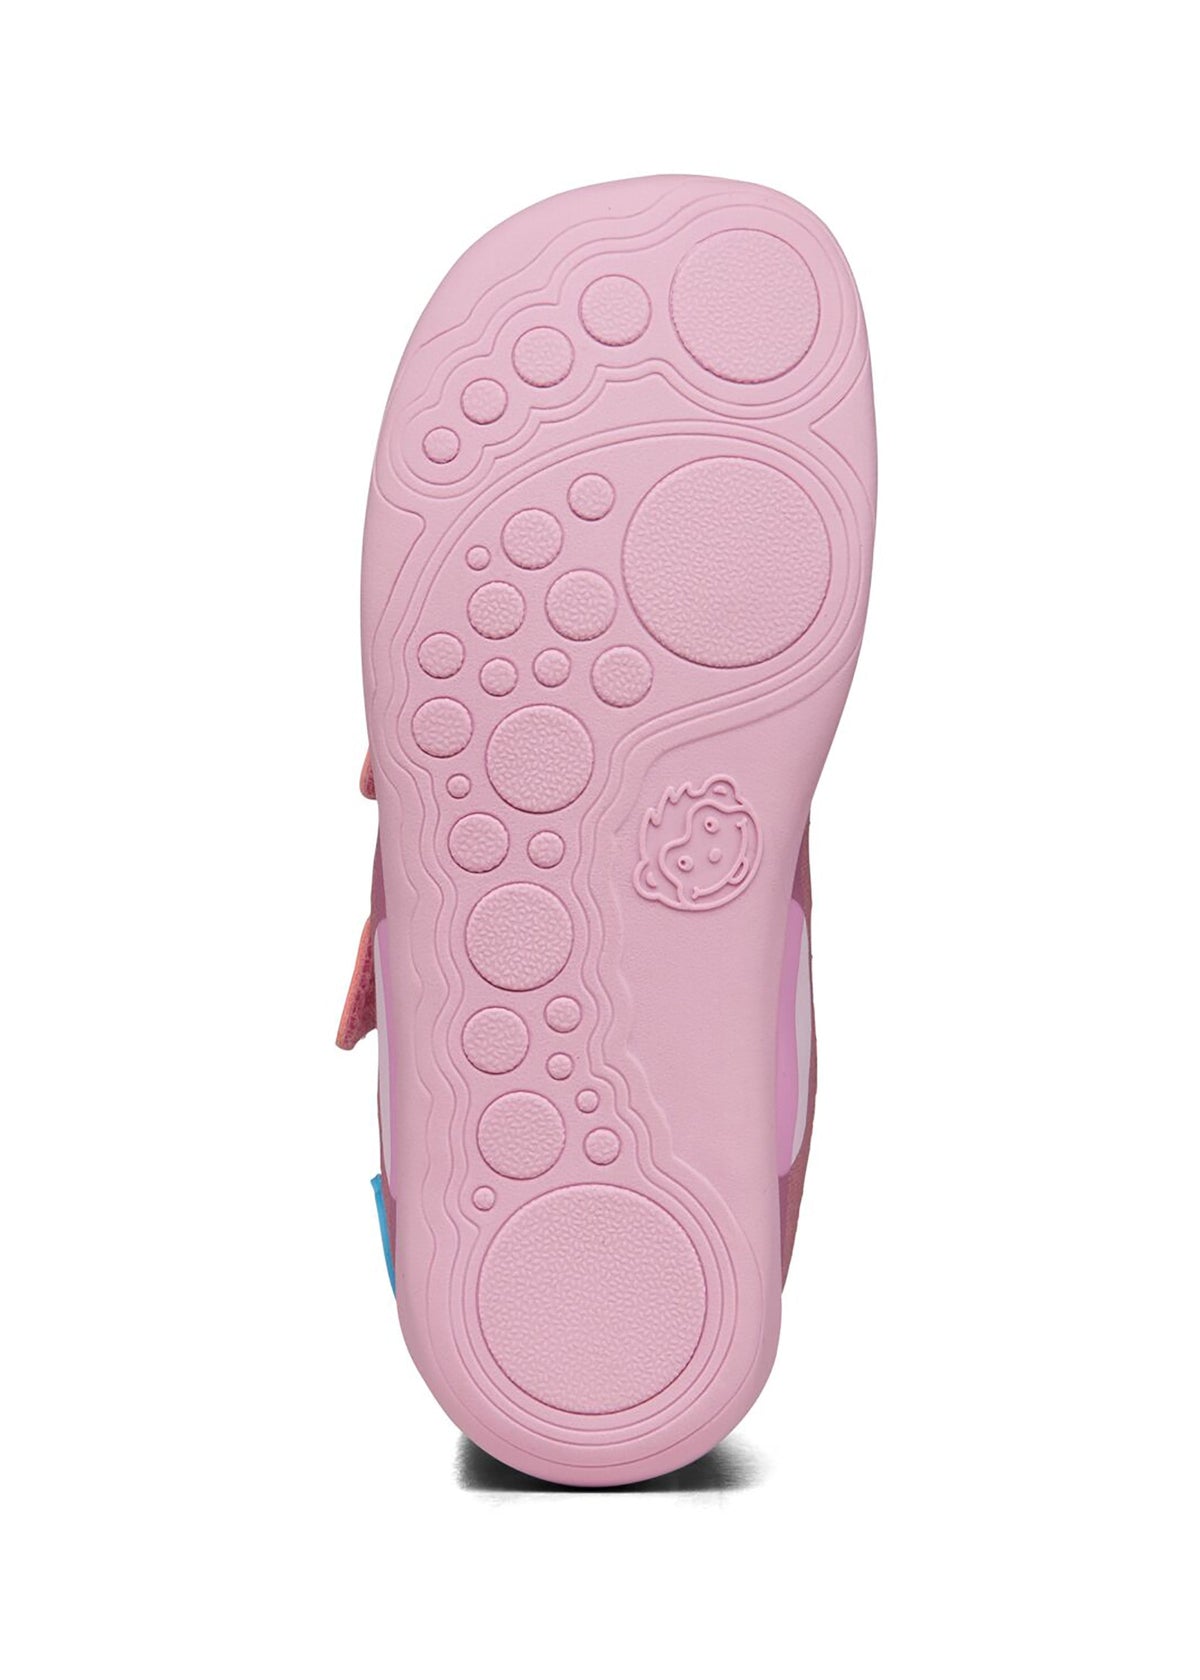 Children's barefoot sneakers - Cotton Lucky, Unicorn, pink, vegan